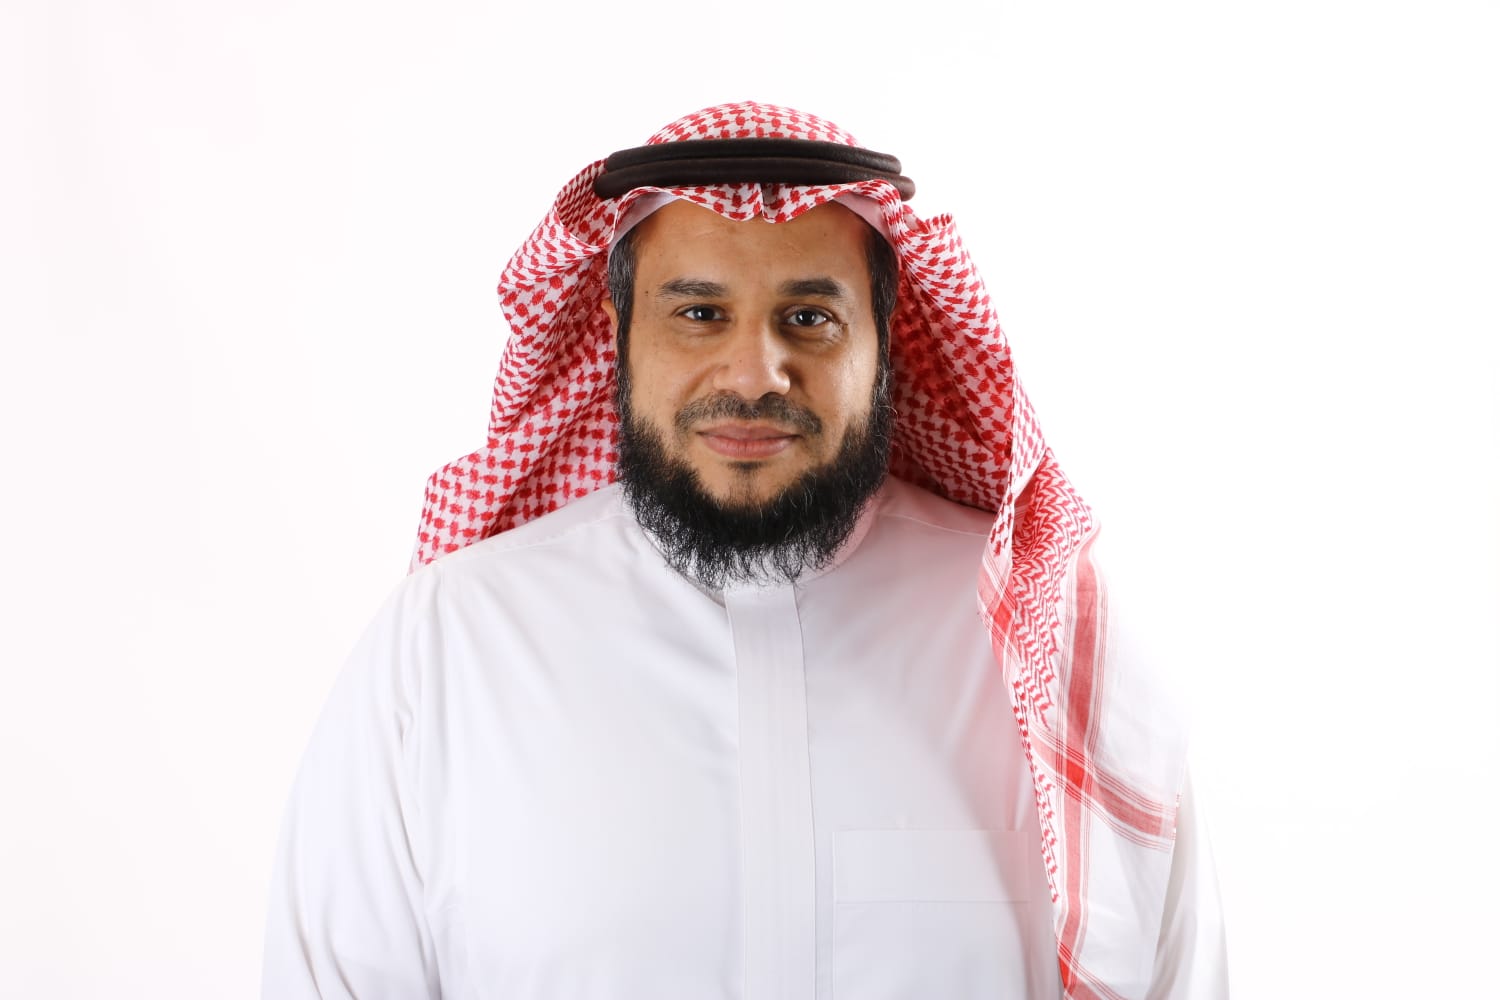 Riyad bin Ali Al-Ghamdi